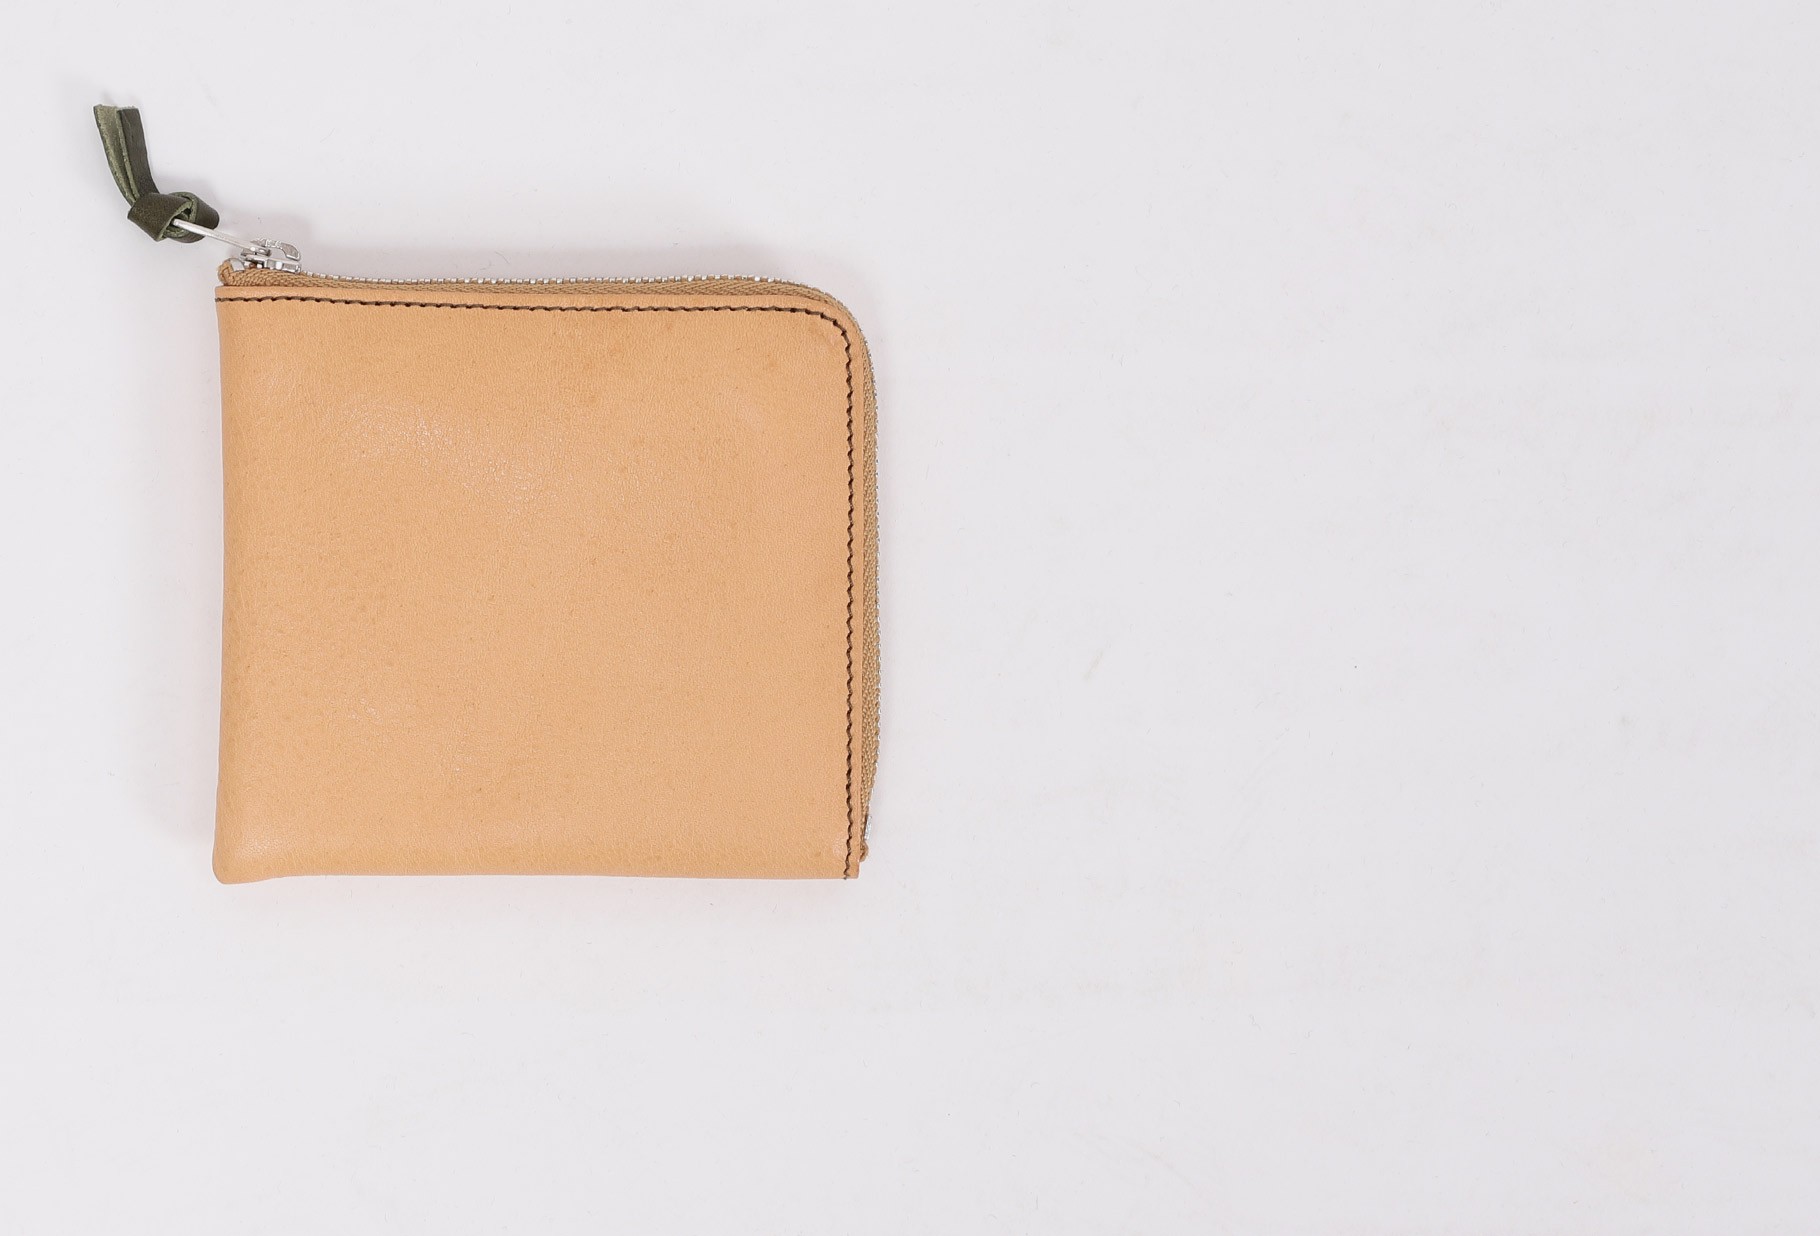 BEAMS PLUS / Double zip wallet Tan orange